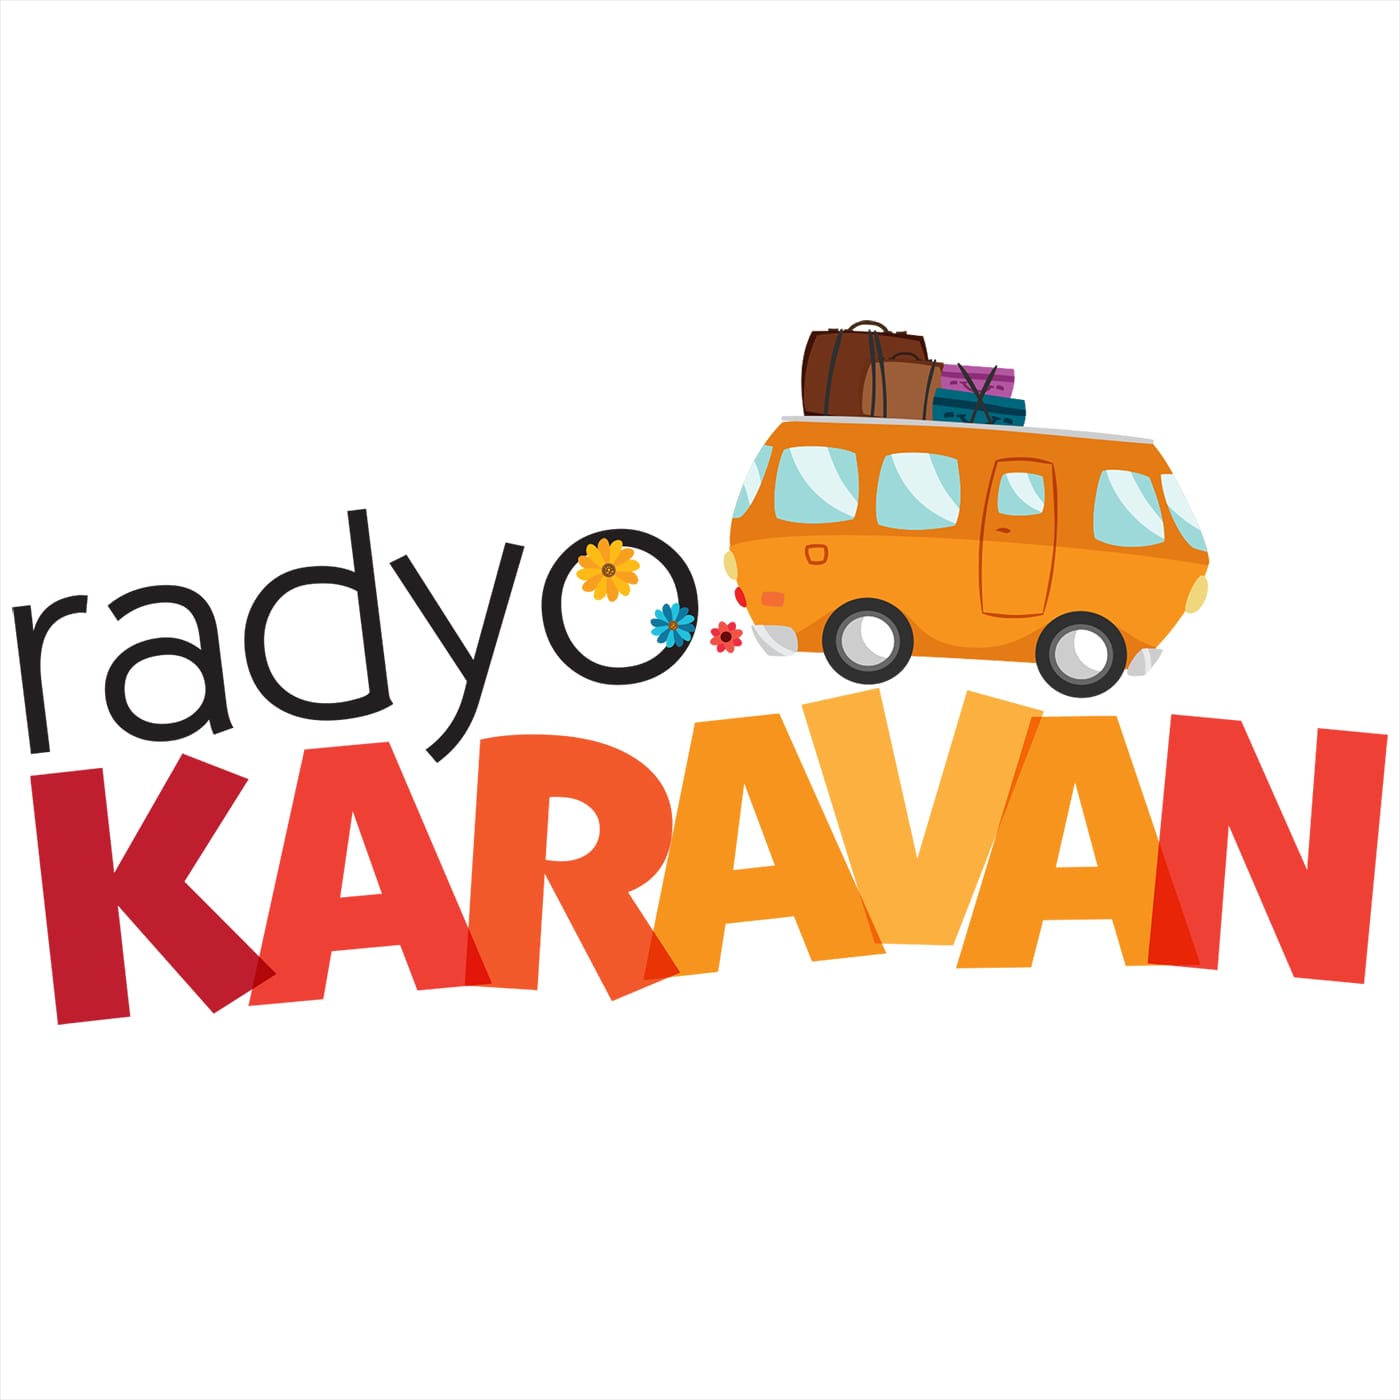 Radyo Karavan